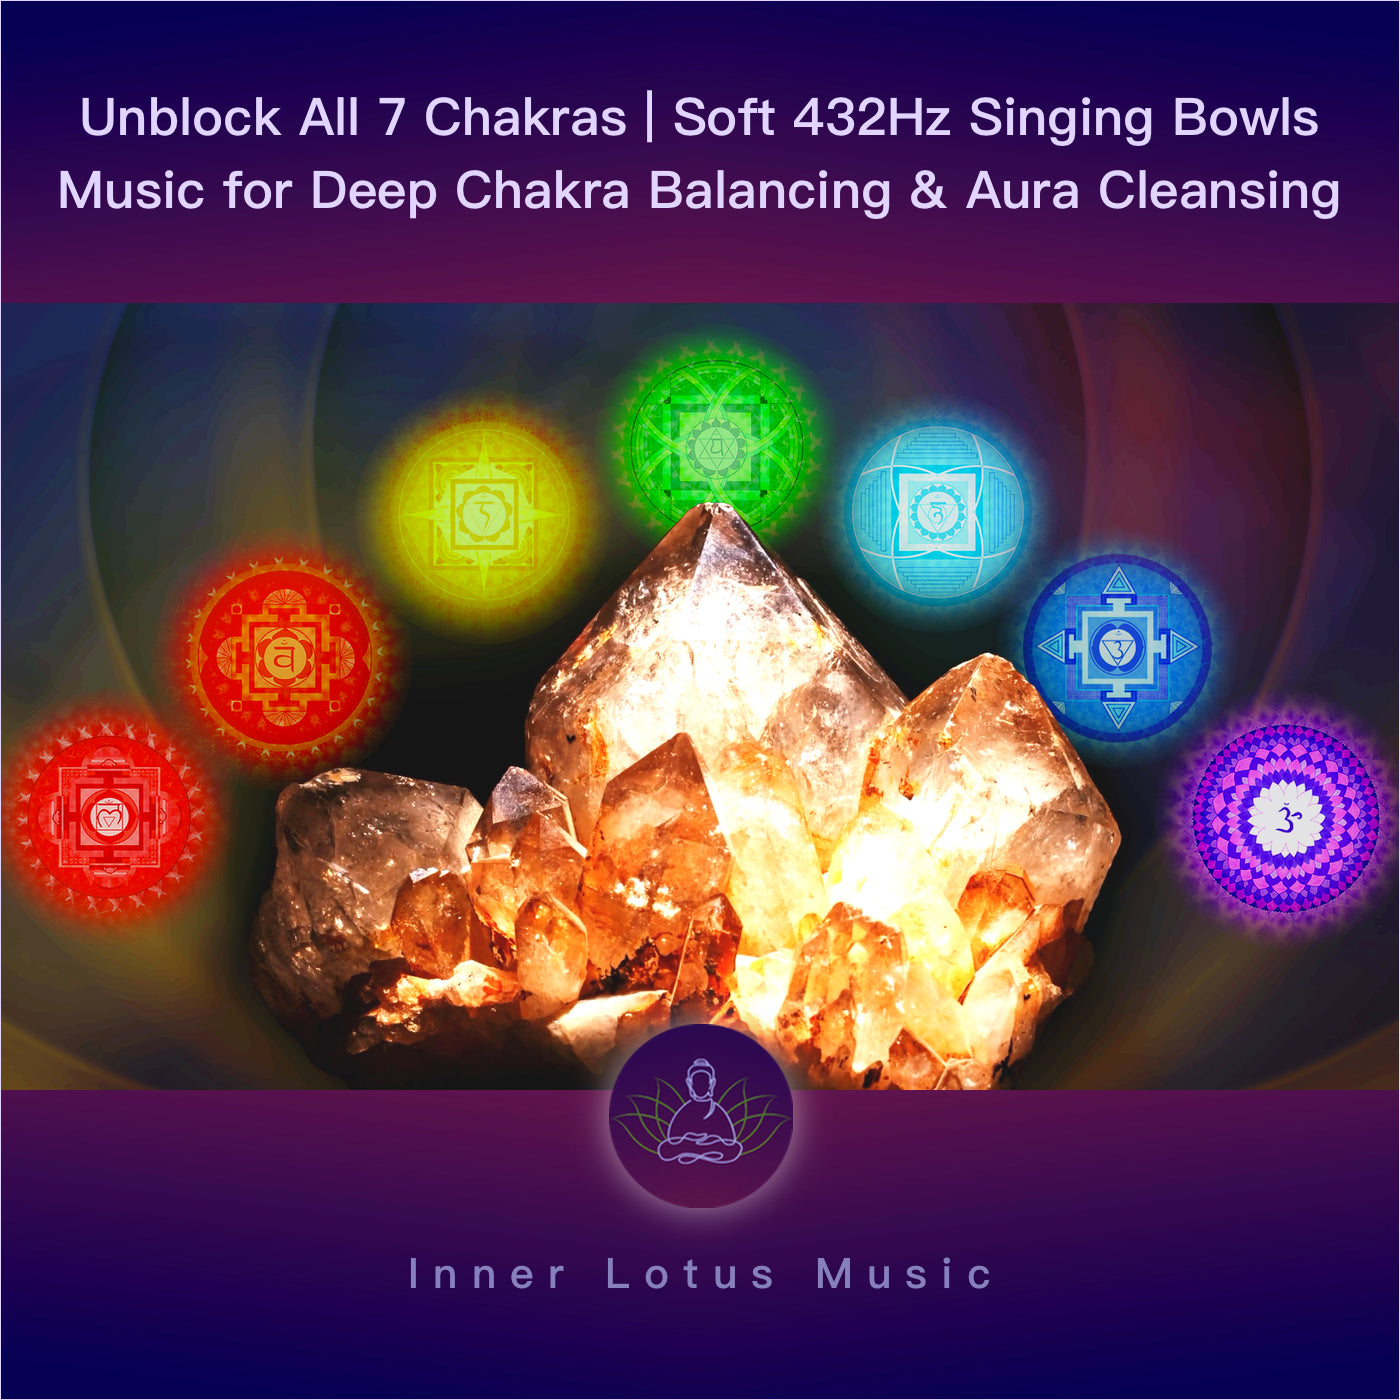 Unblock All 7 Chakras | Soft 432Hz Singing Bowls Music for Deep Chakra Balancing & Aura Cleansing